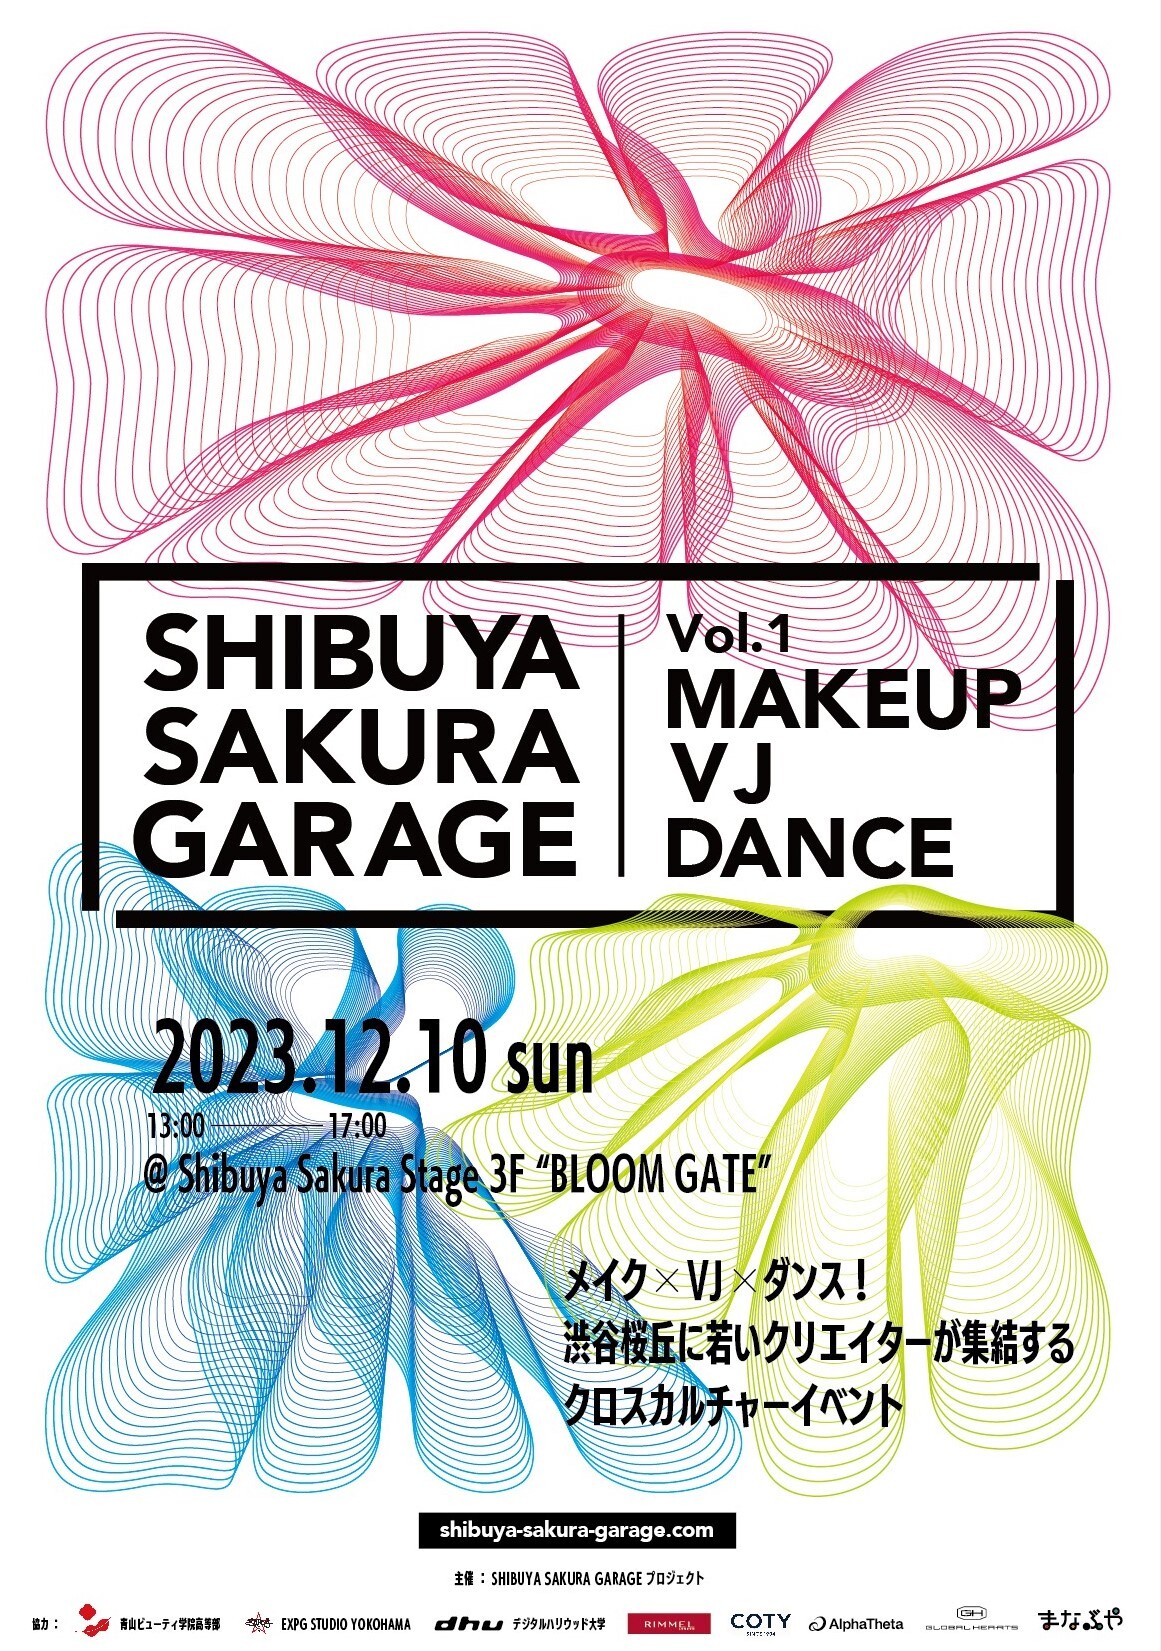 SHIBUYA SAKURA GARAGE Vol.1　 MAKEUP/VJ/DANCE